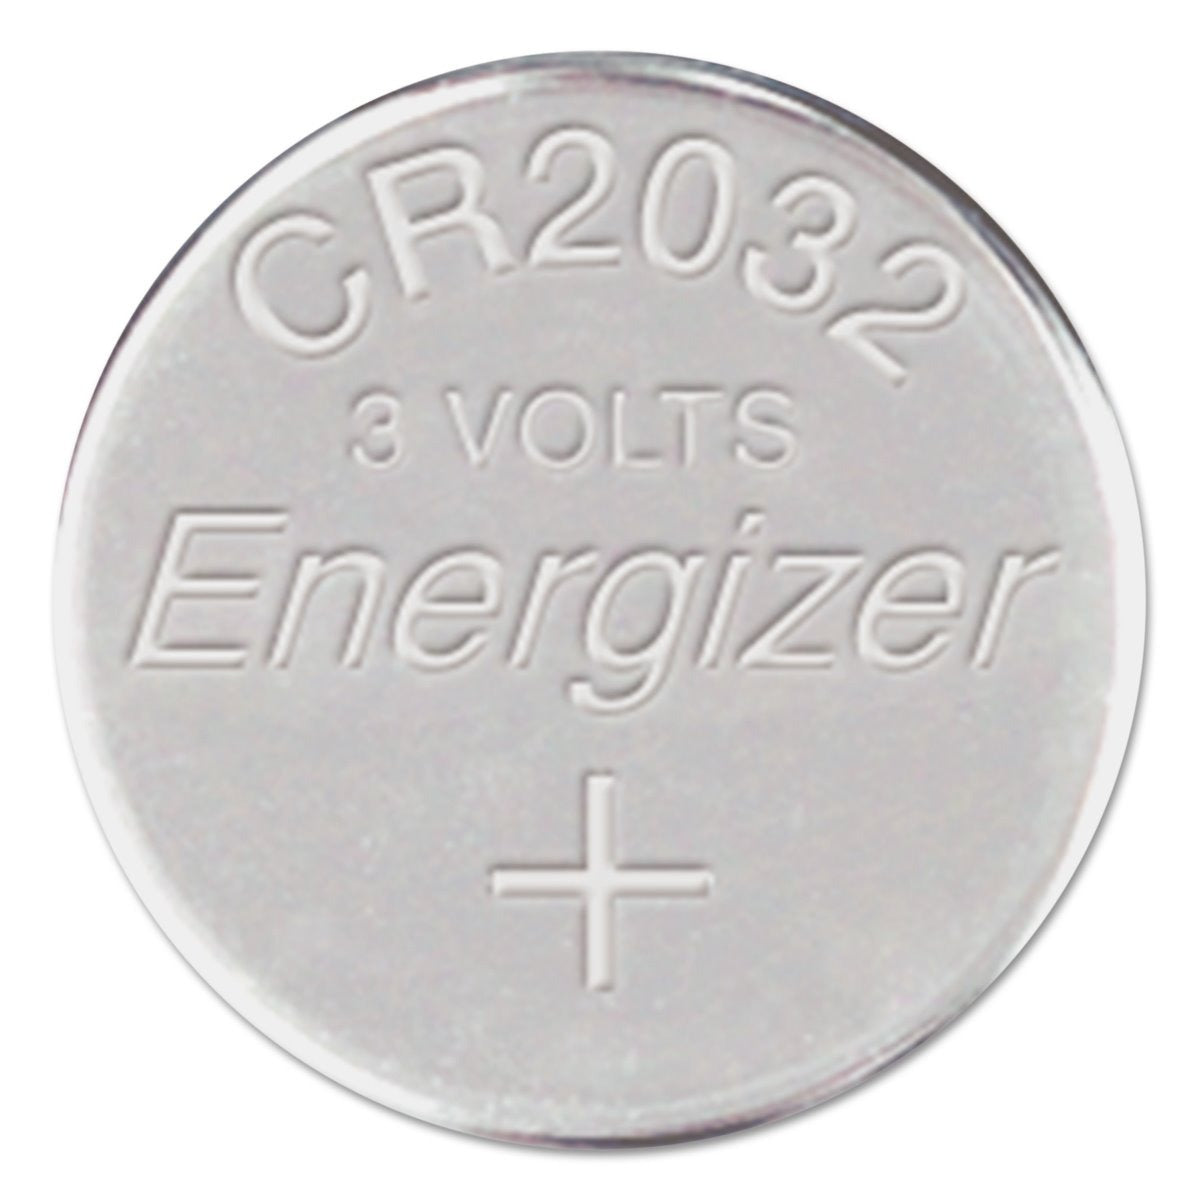 Pila 3V Energizer ECR2032